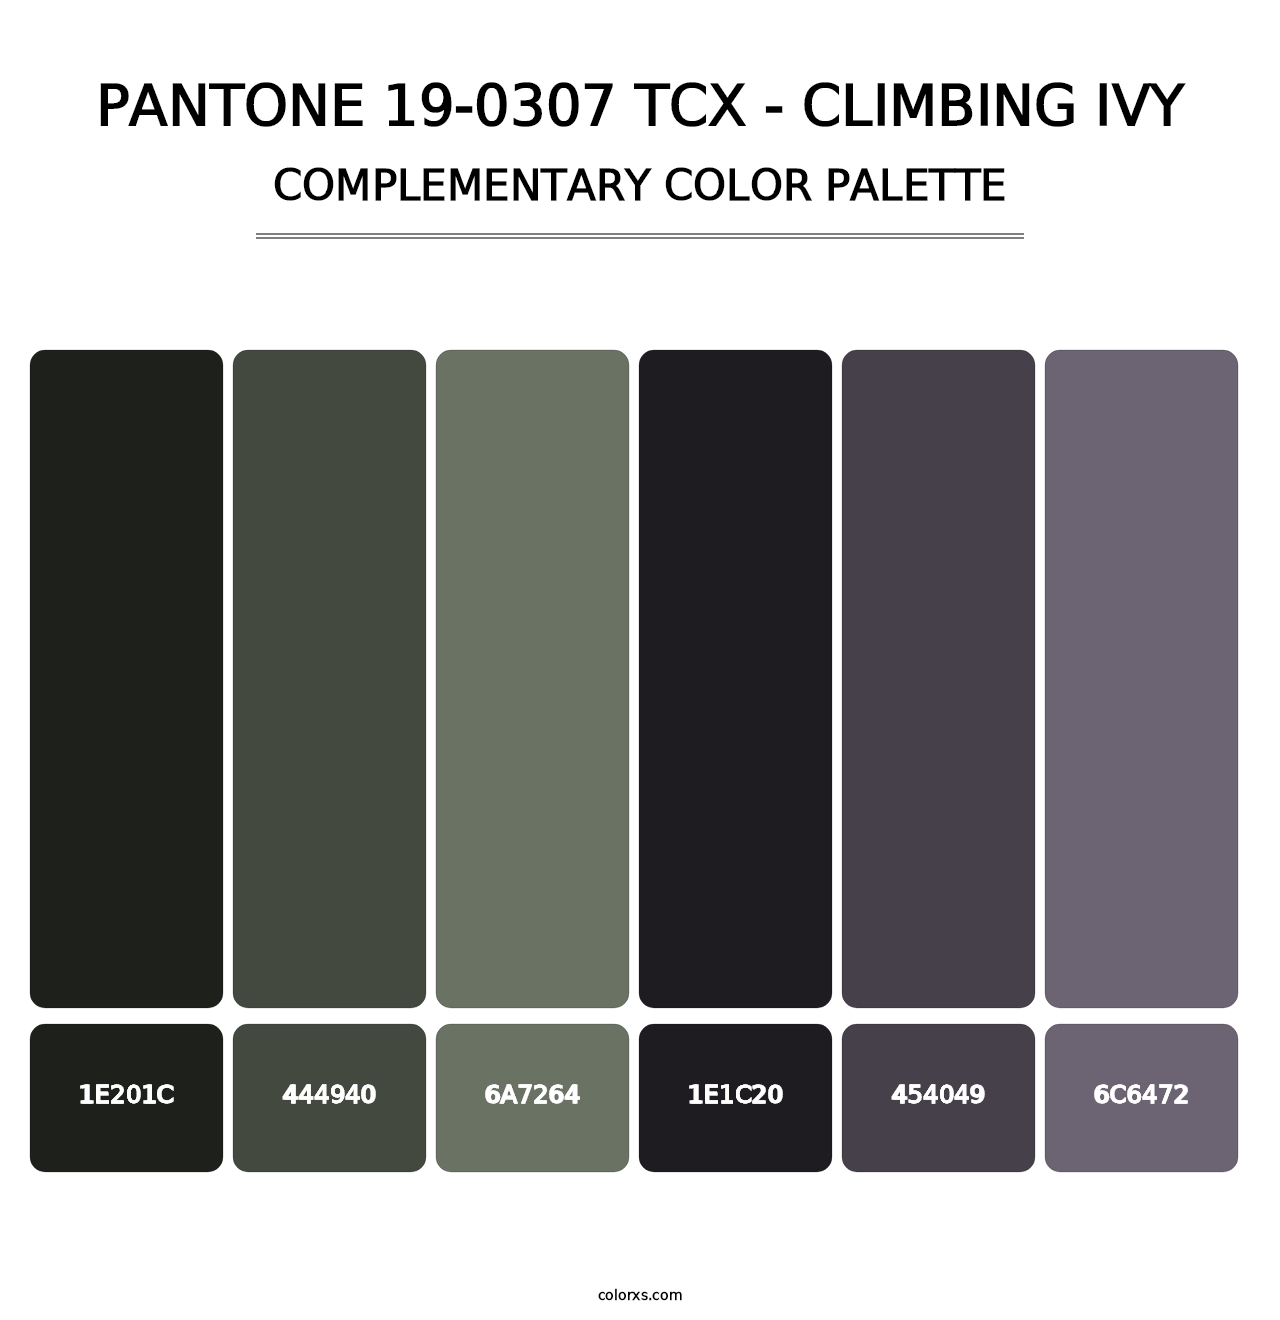 PANTONE 19-0307 TCX - Climbing Ivy - Complementary Color Palette